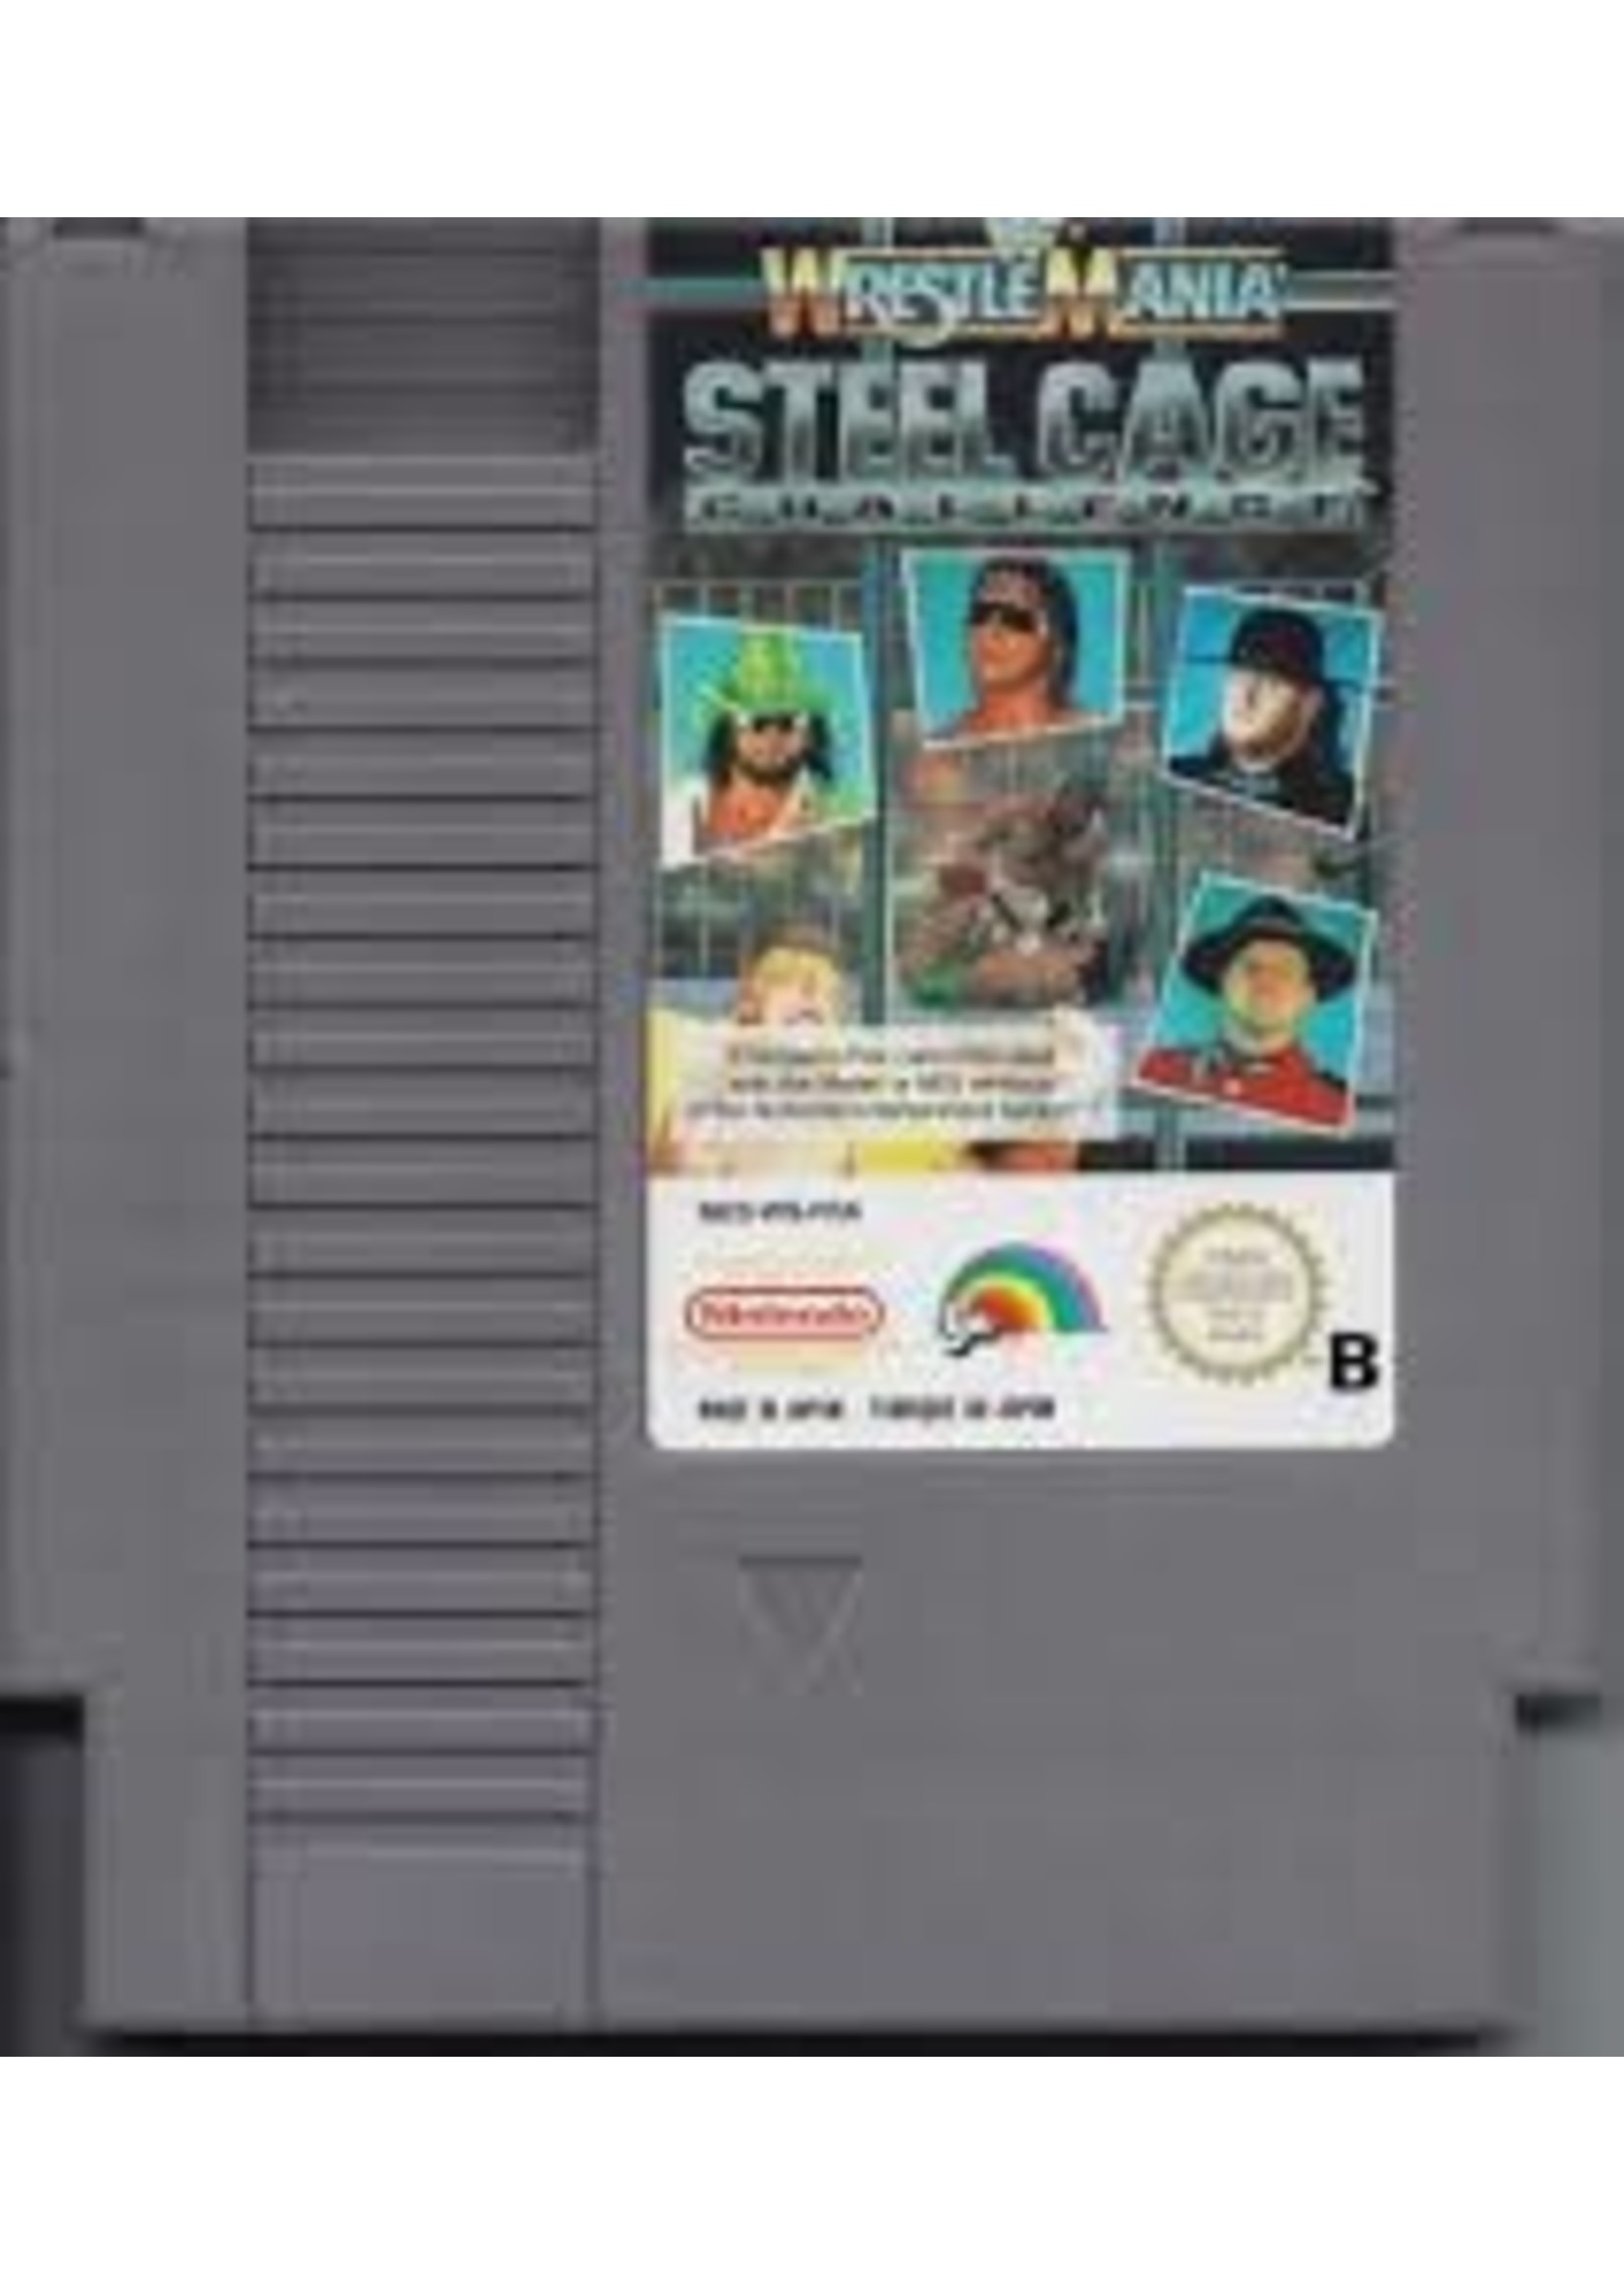 Nintendo (NES) WWF Wrestlemania Steel Cage Challenge